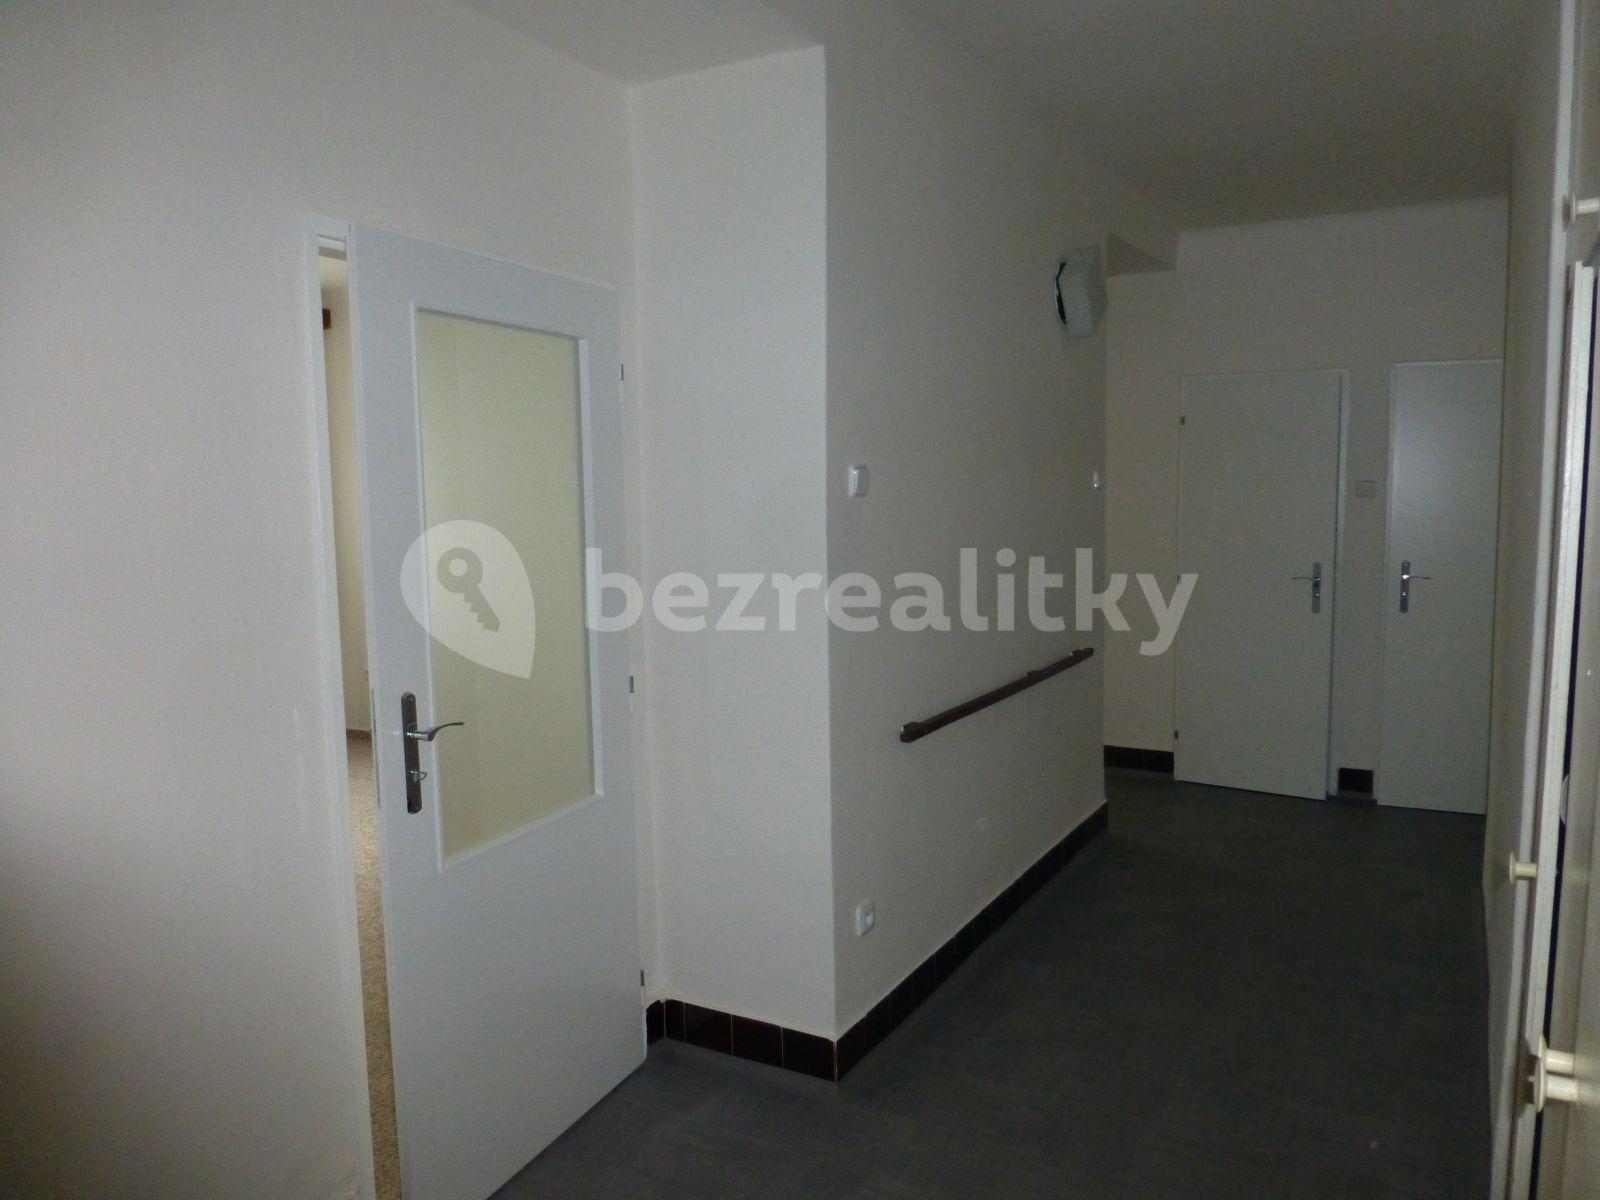 2 bedroom flat to rent, 61 m², Jerevanská, Prague, Prague